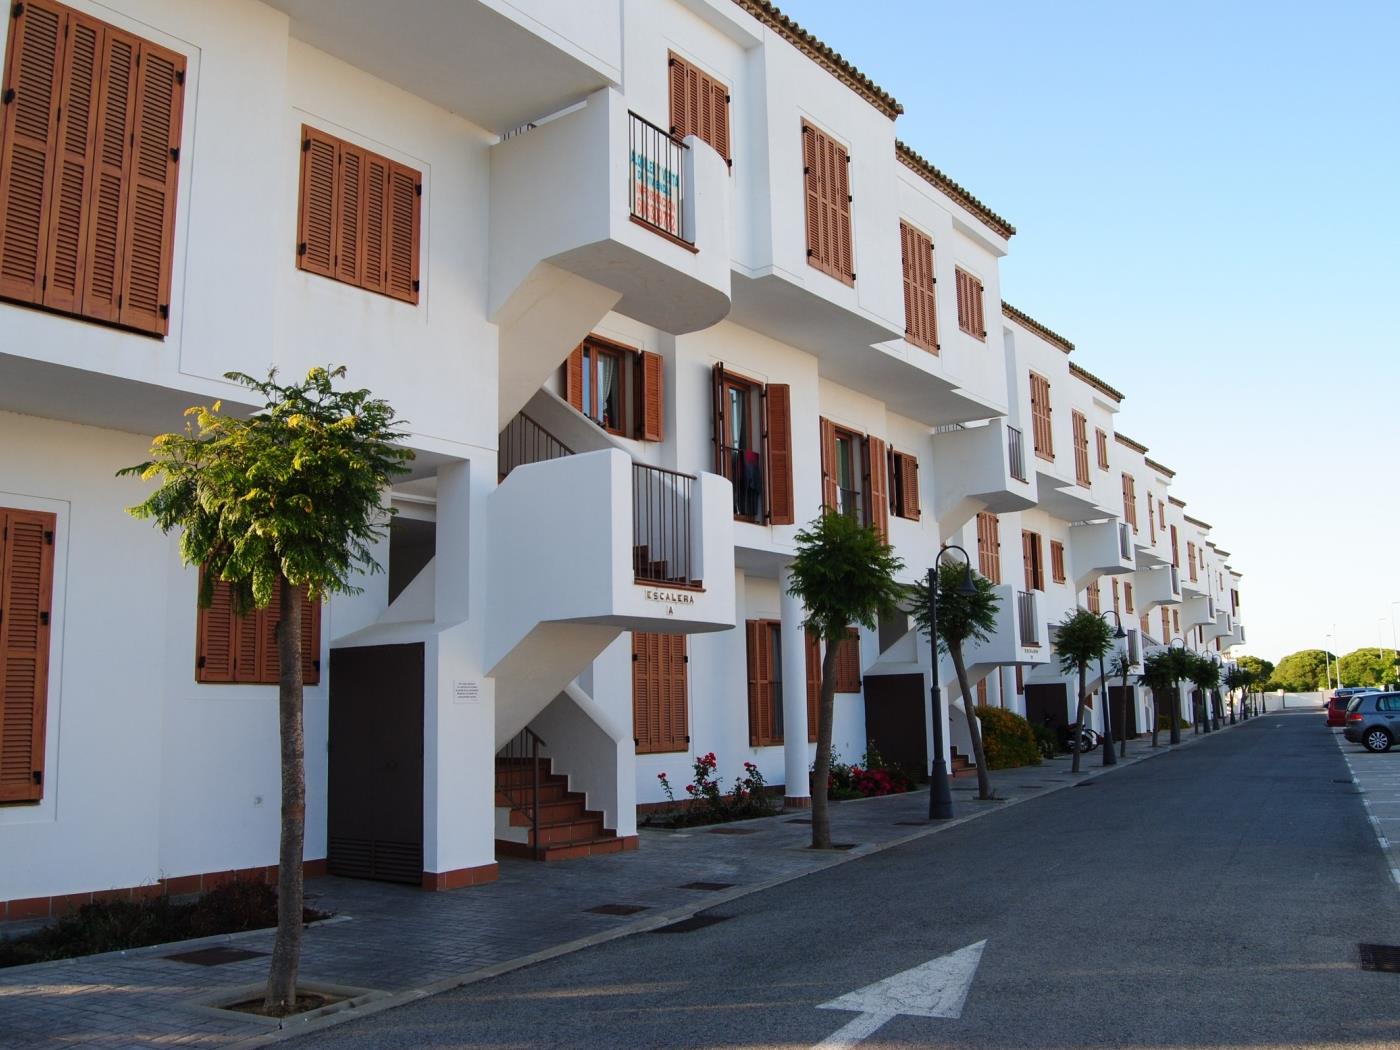 Ref B1. Two-bedroom apartment on the ground floor in Chiclana de la Frontera